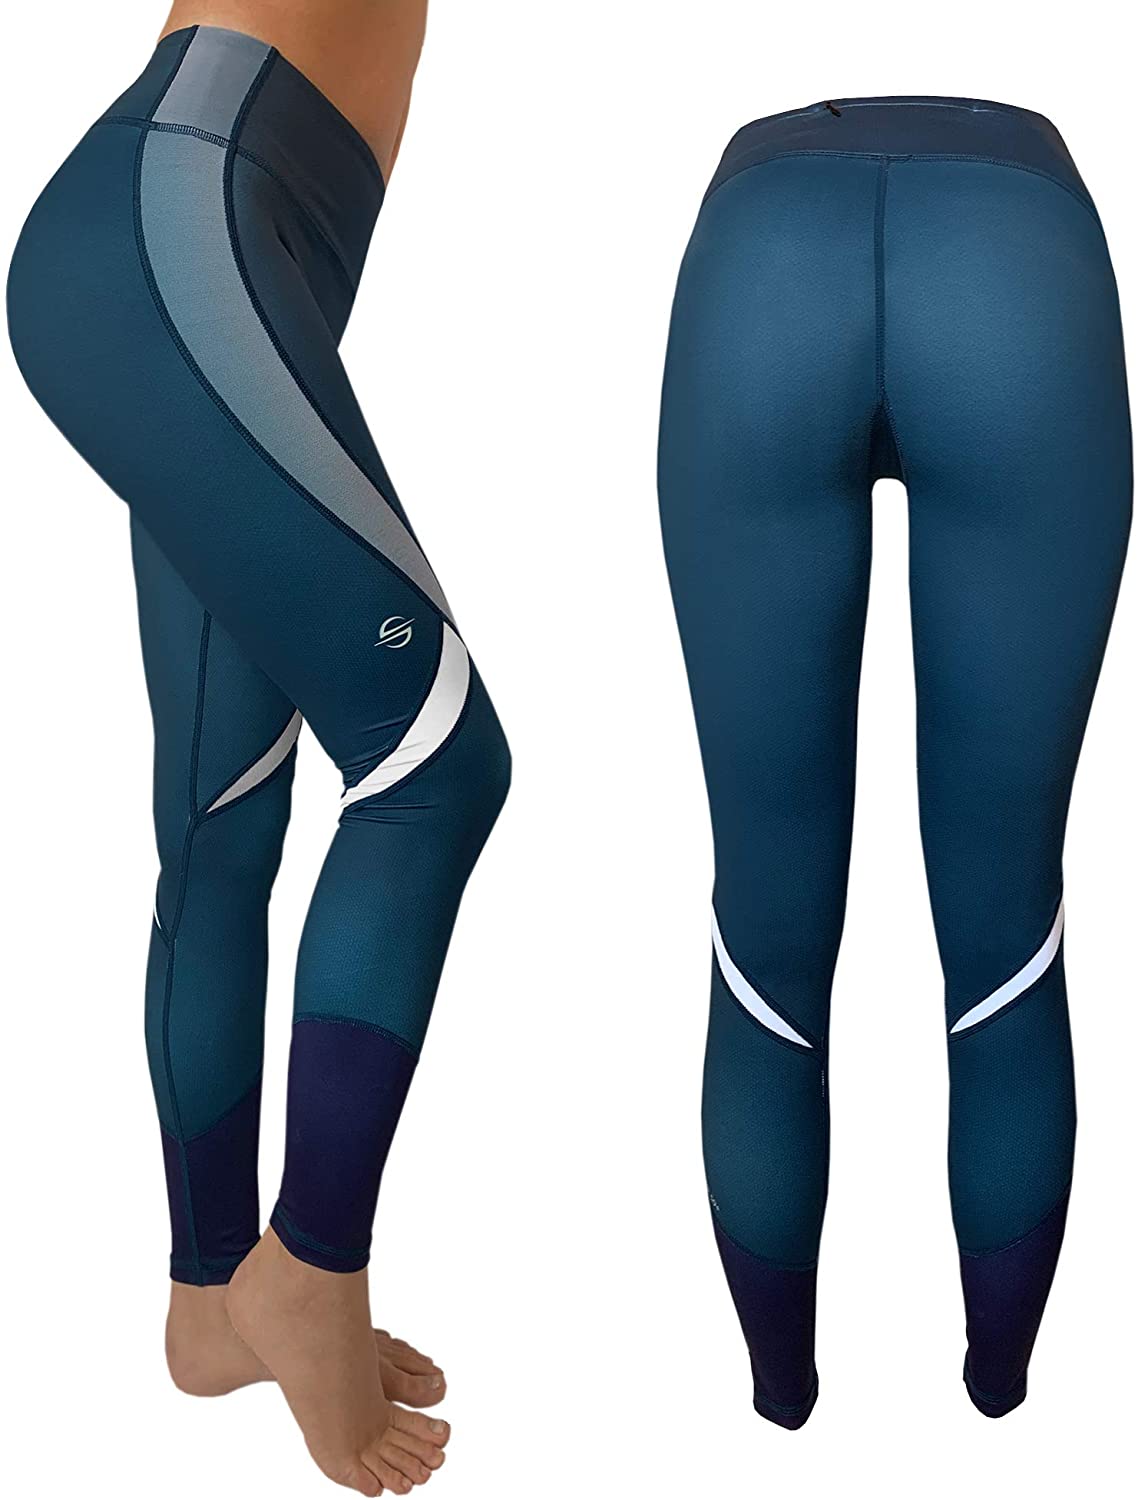 Women's Swim Workout Pattern Leggings Wetsuit Pants Tights UPF 50+